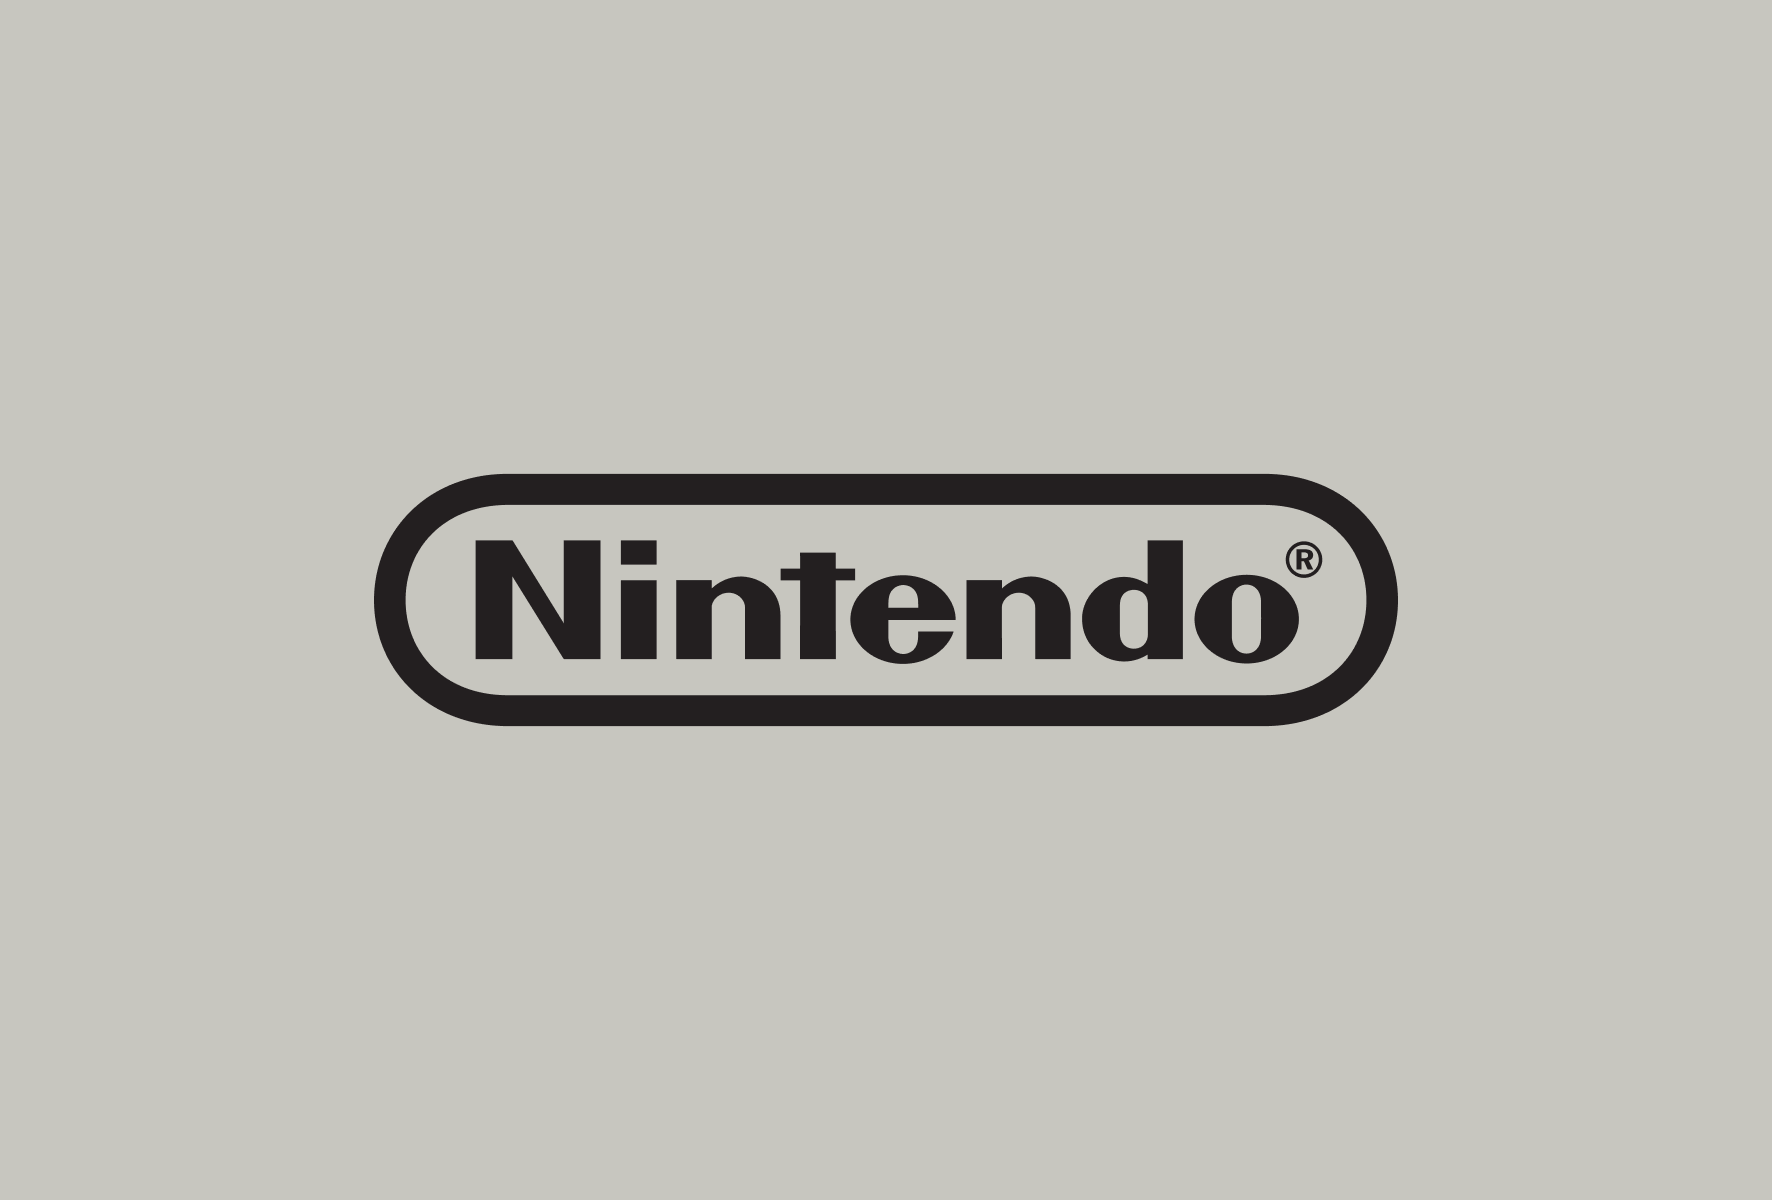 Famous Logos part IX - Nintendo